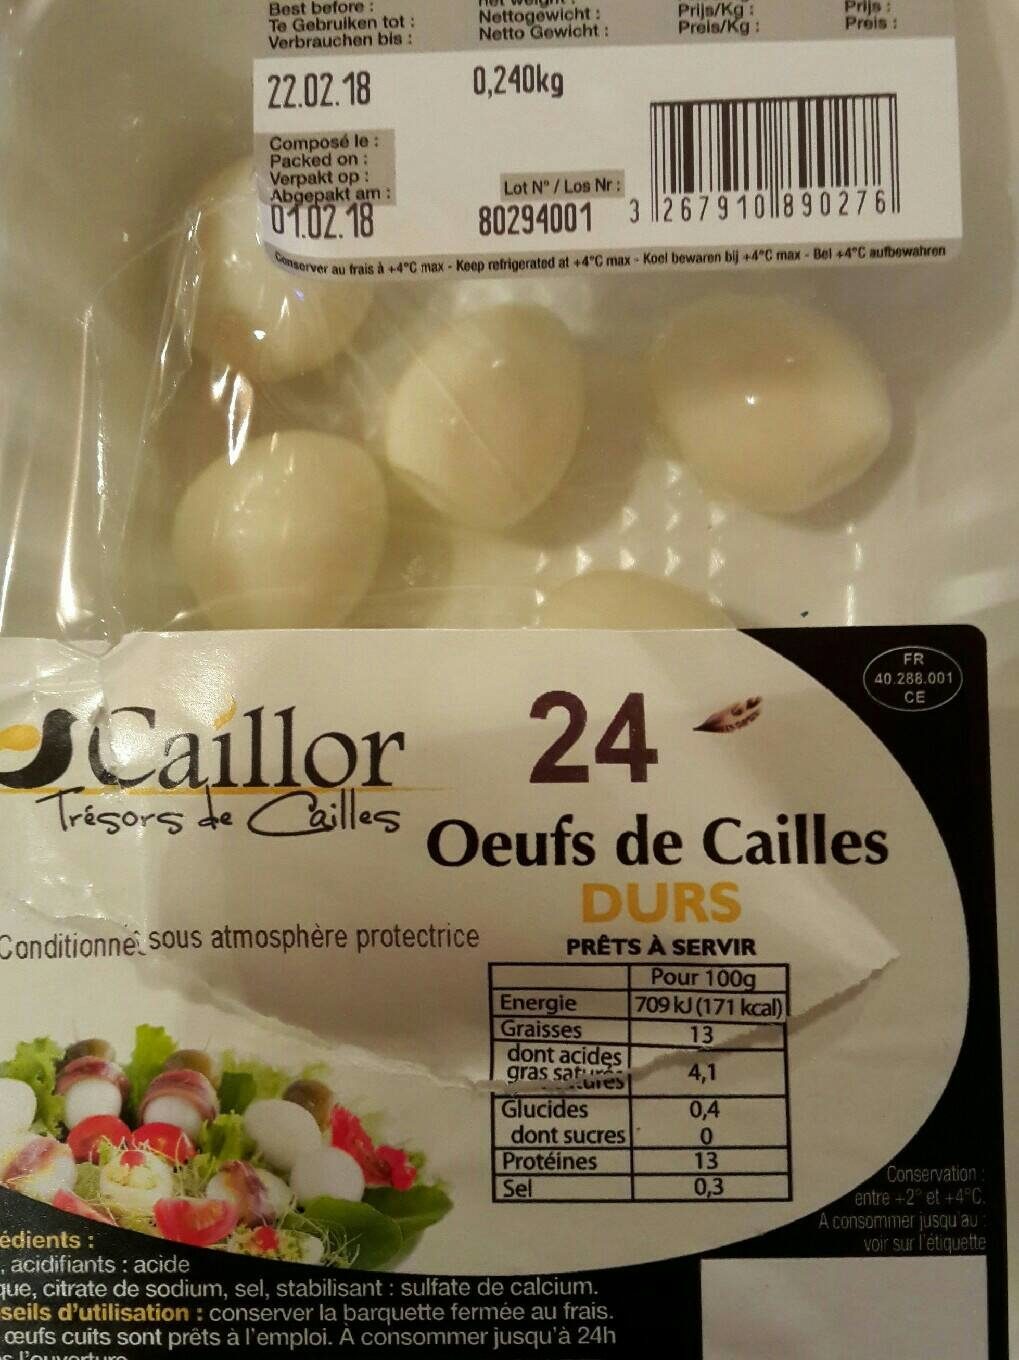 24 oeufs de caille cuits Caillor - Product - fr